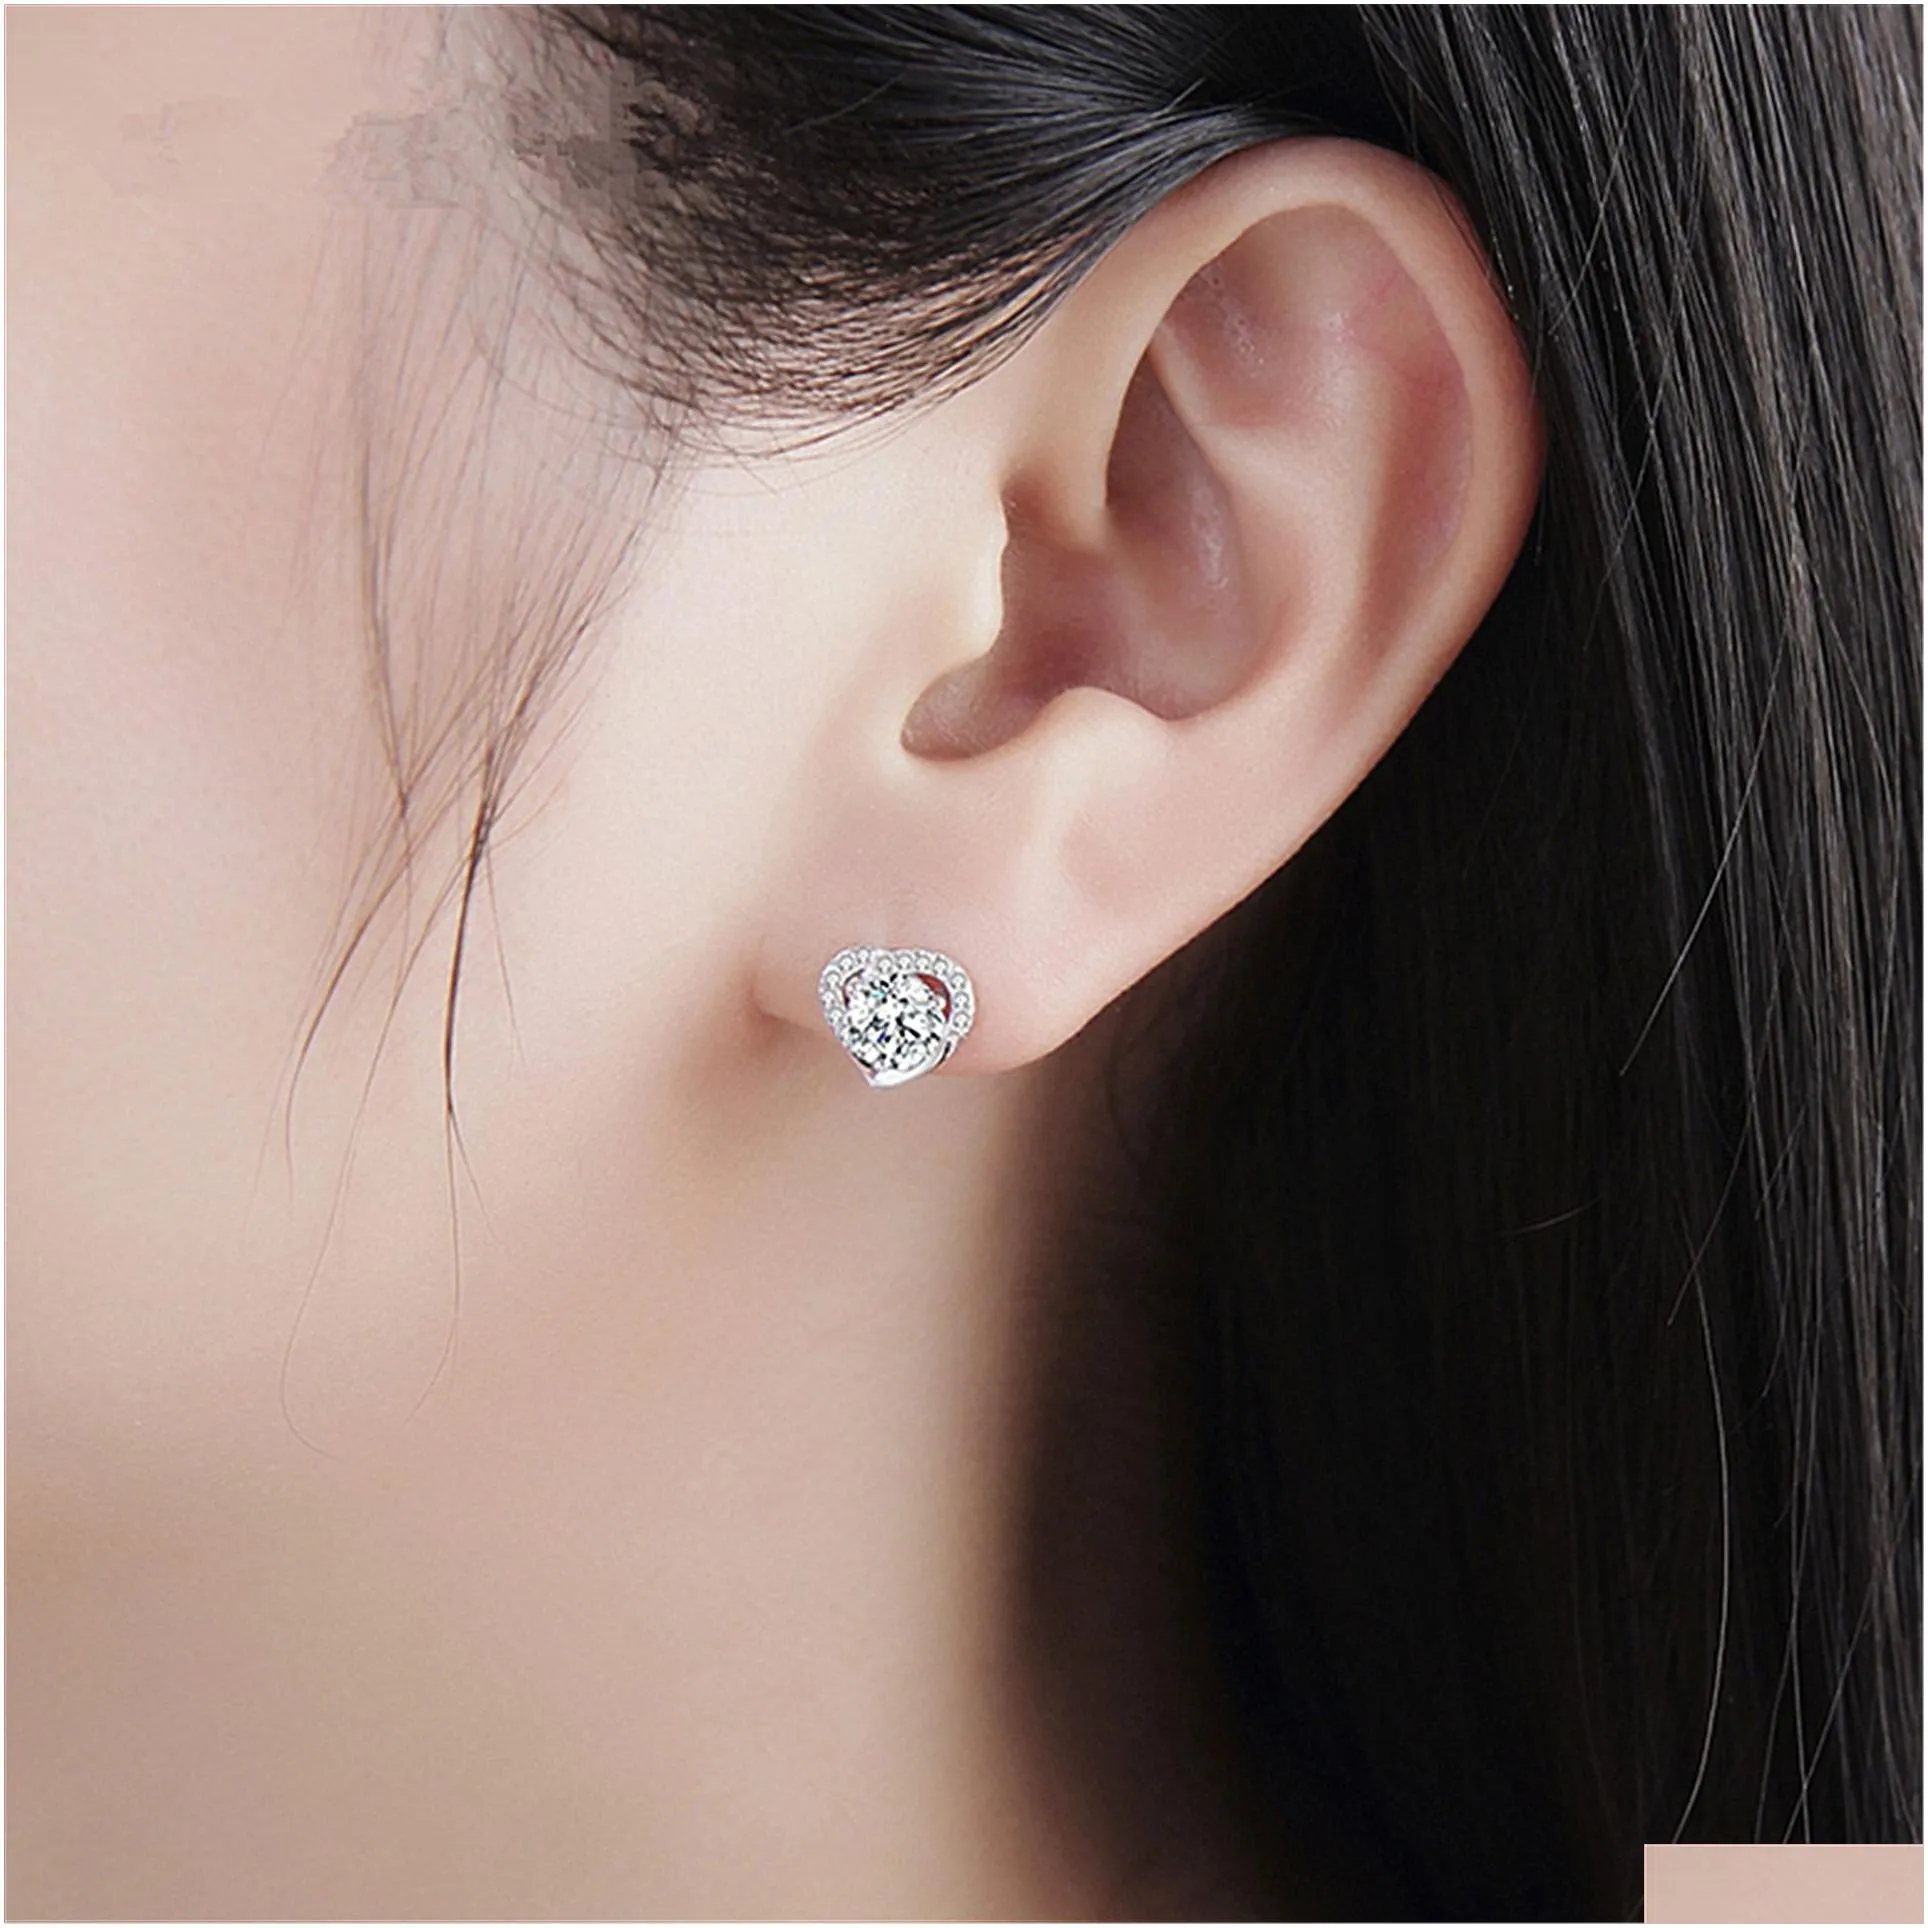 heart earrings for women crystal earrings high quality romantic female accessories timeless styling jewelry silver stud earring